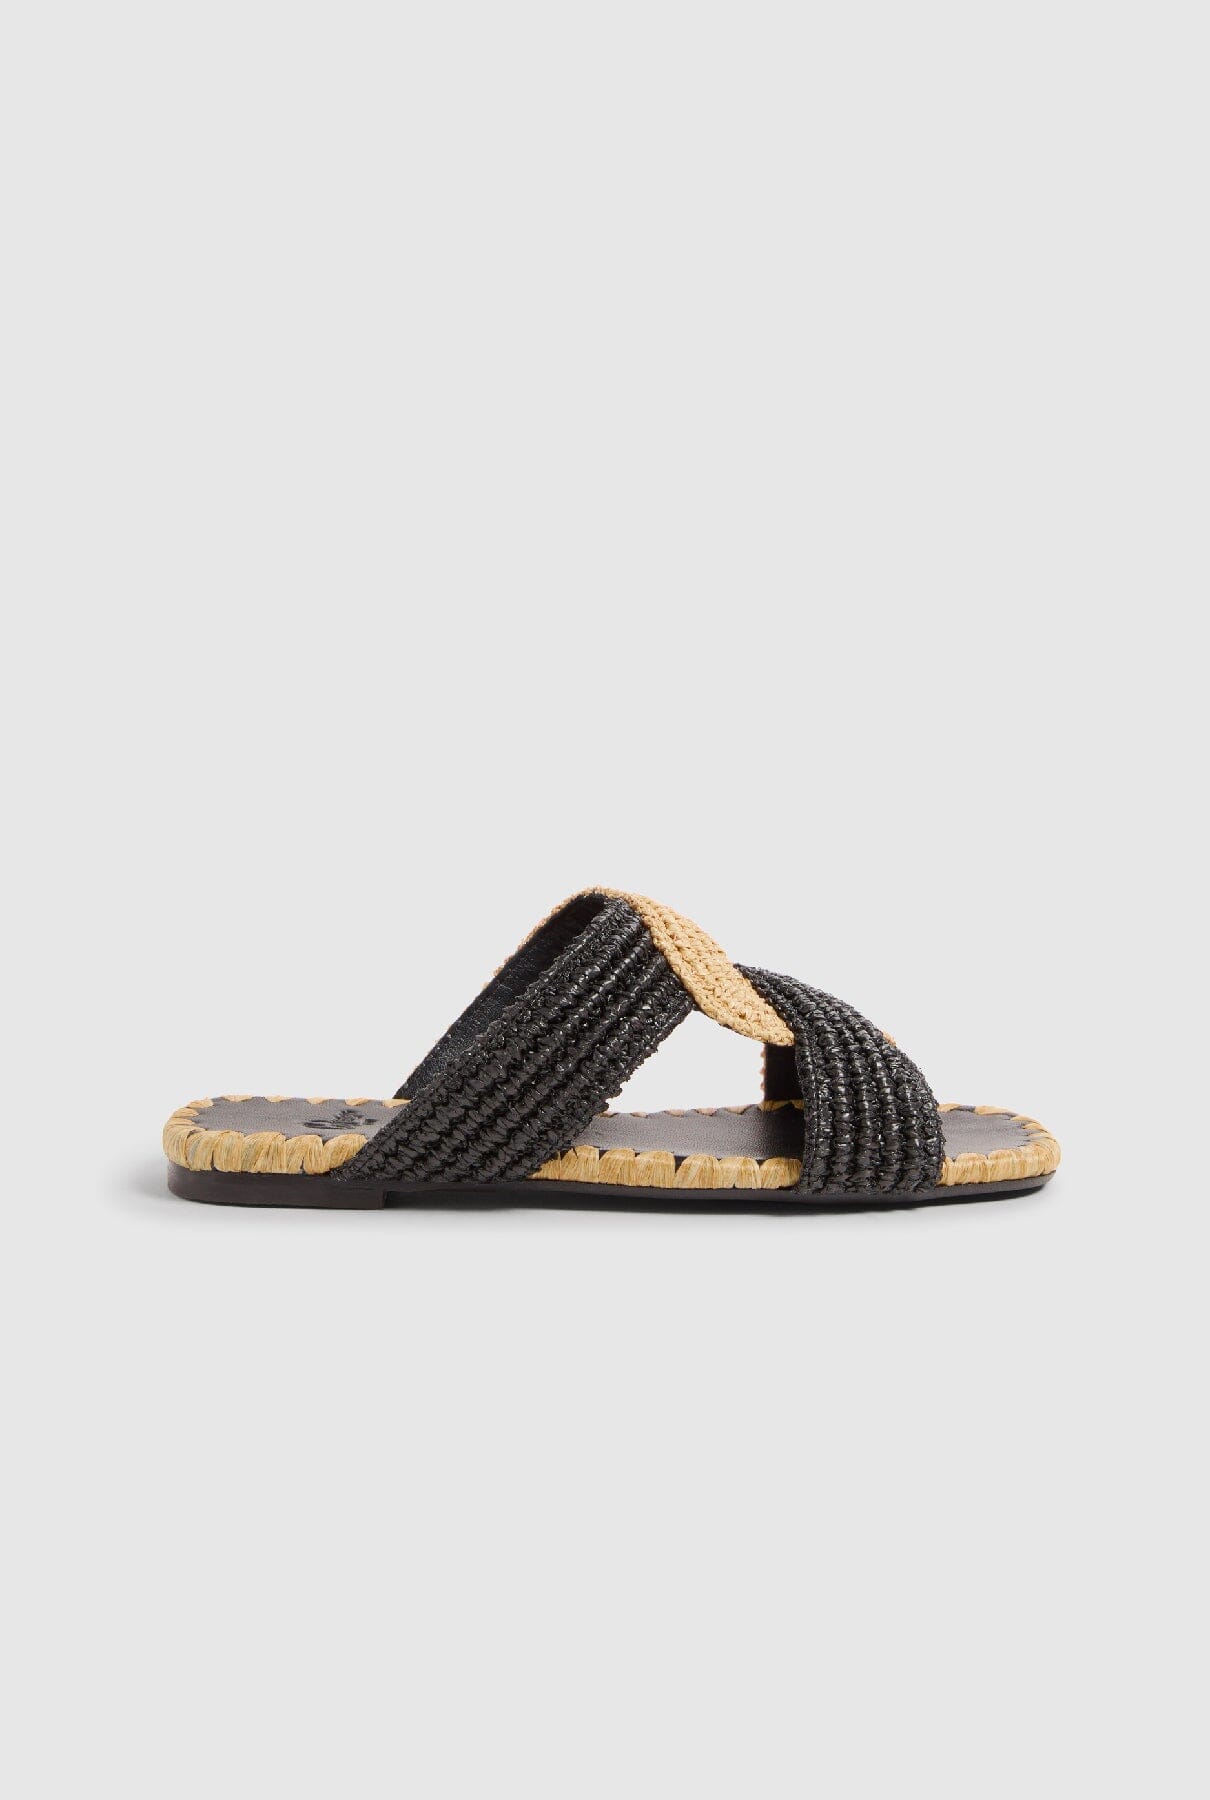 PRADO/203 NATURAL/NEGRO Flat sandals Castañer 